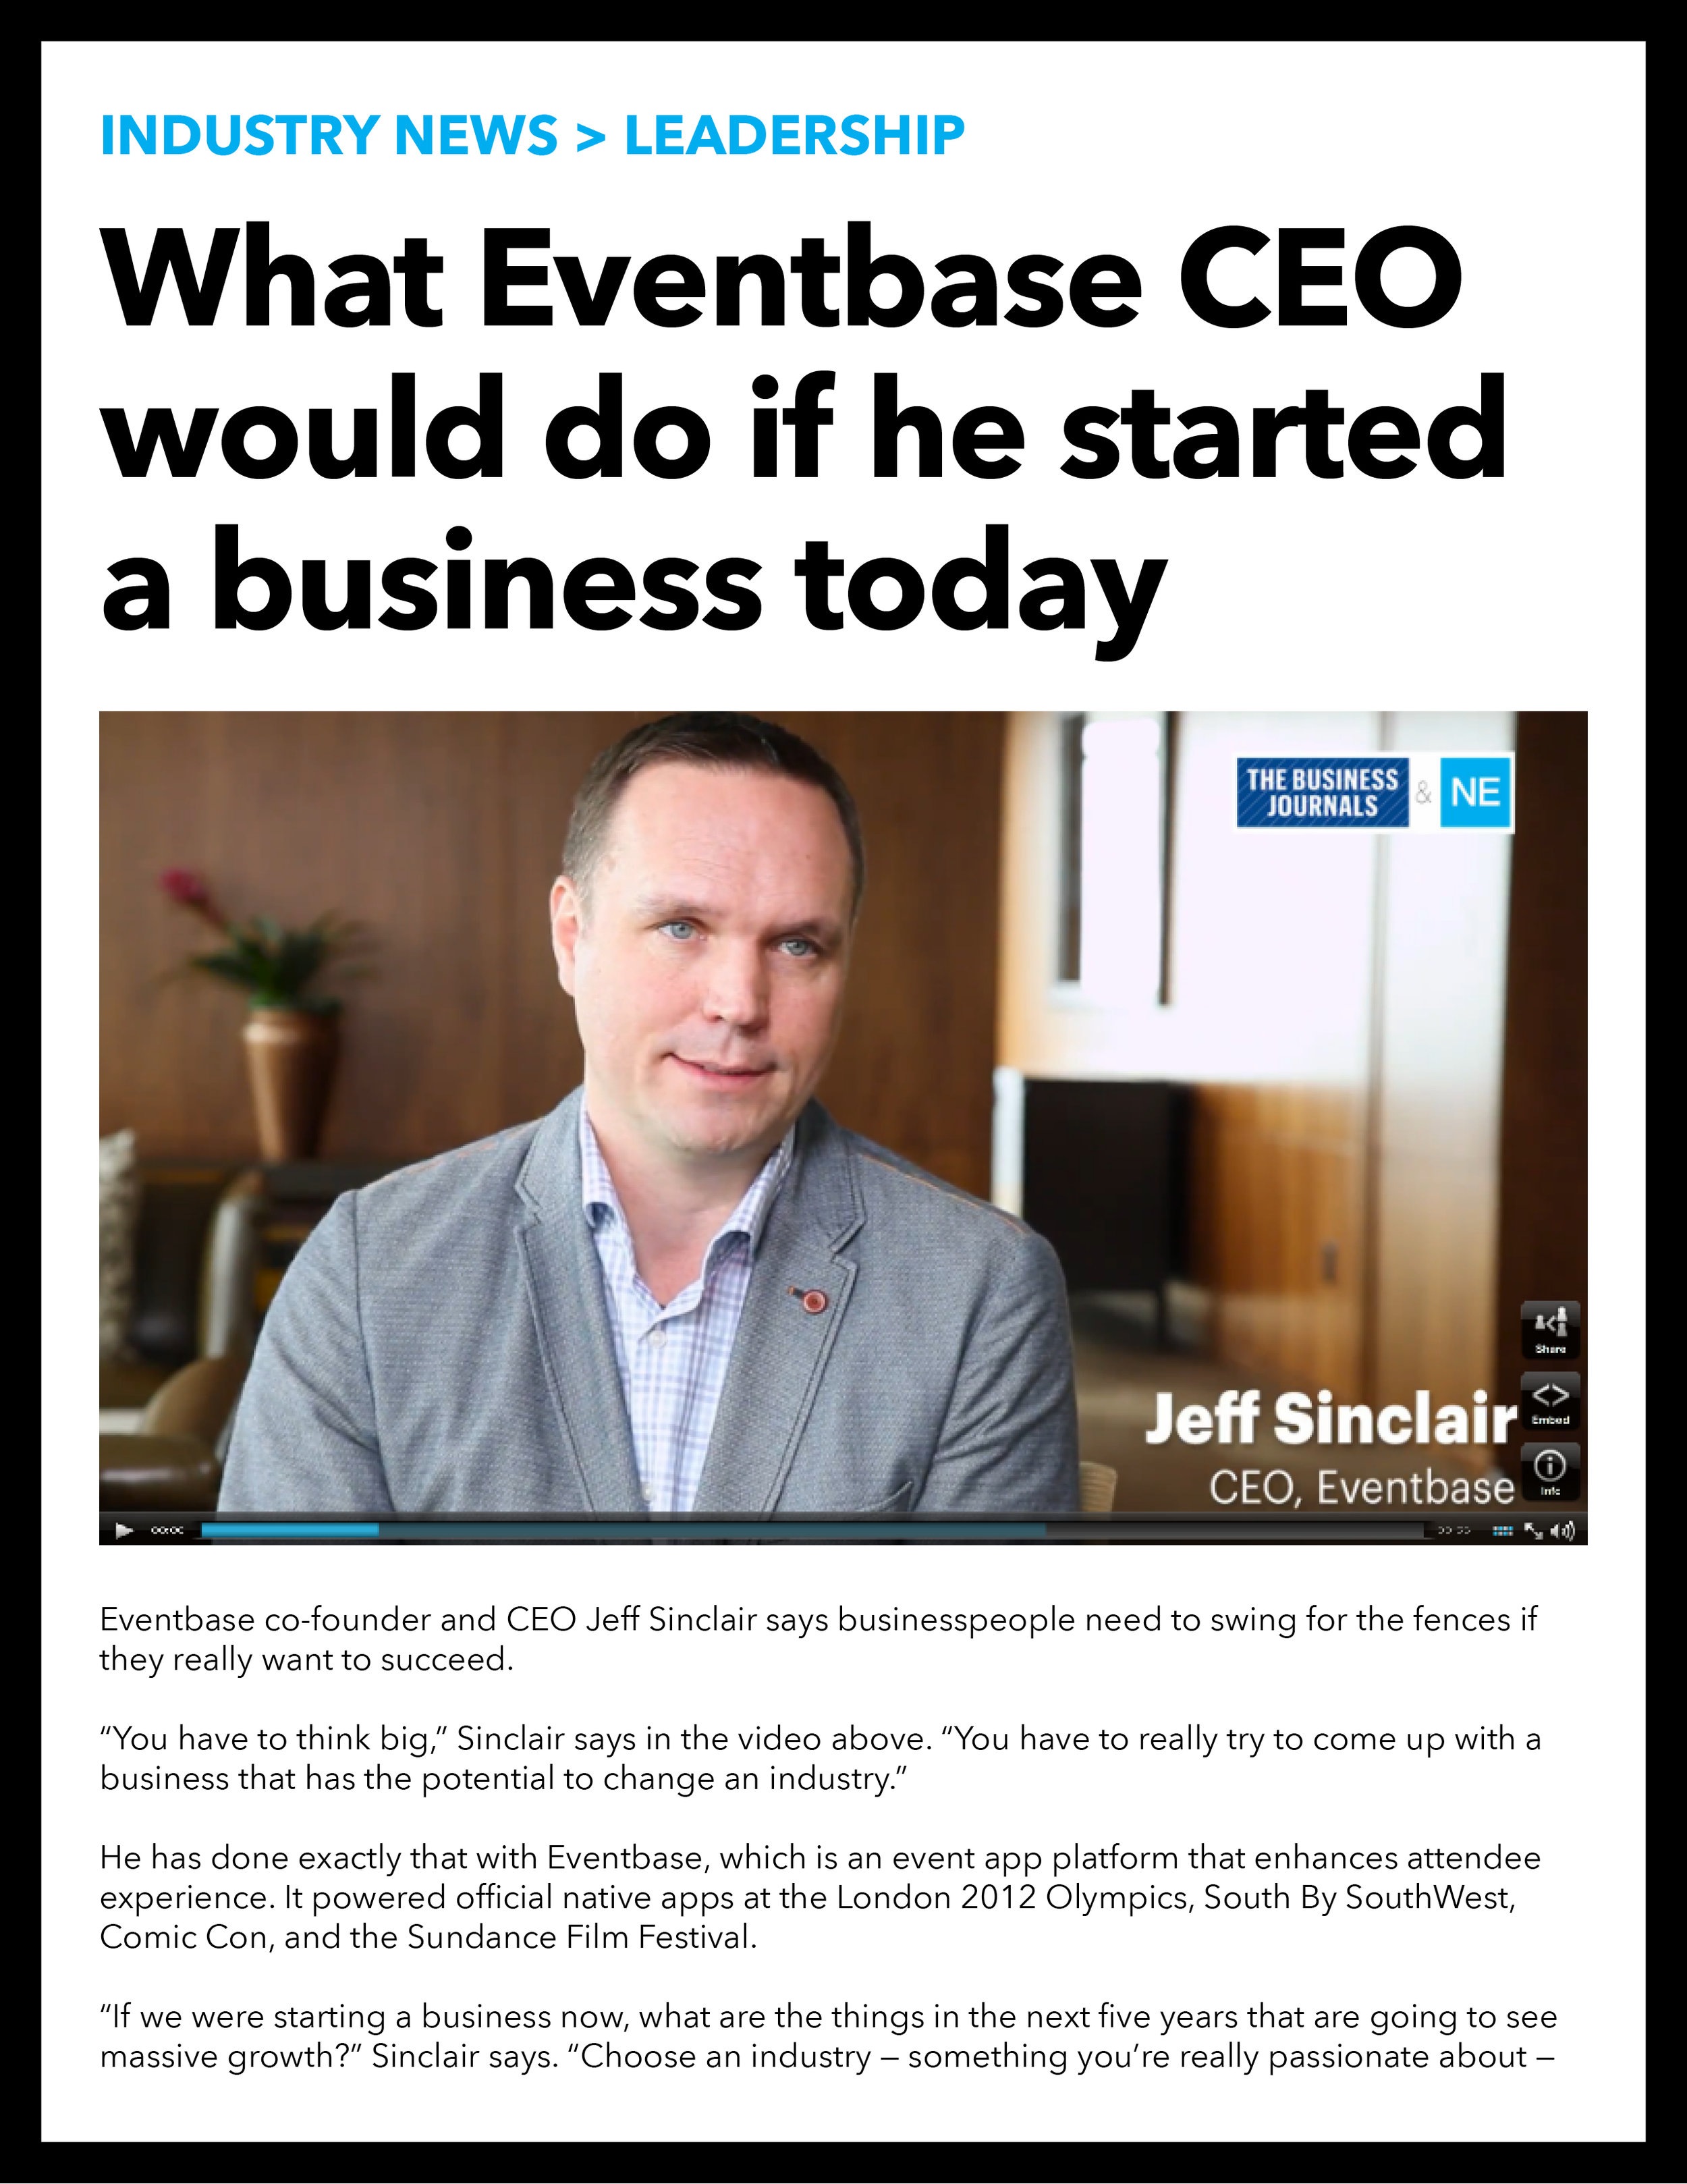 Jeff Sinclair, CEO of Eventbase